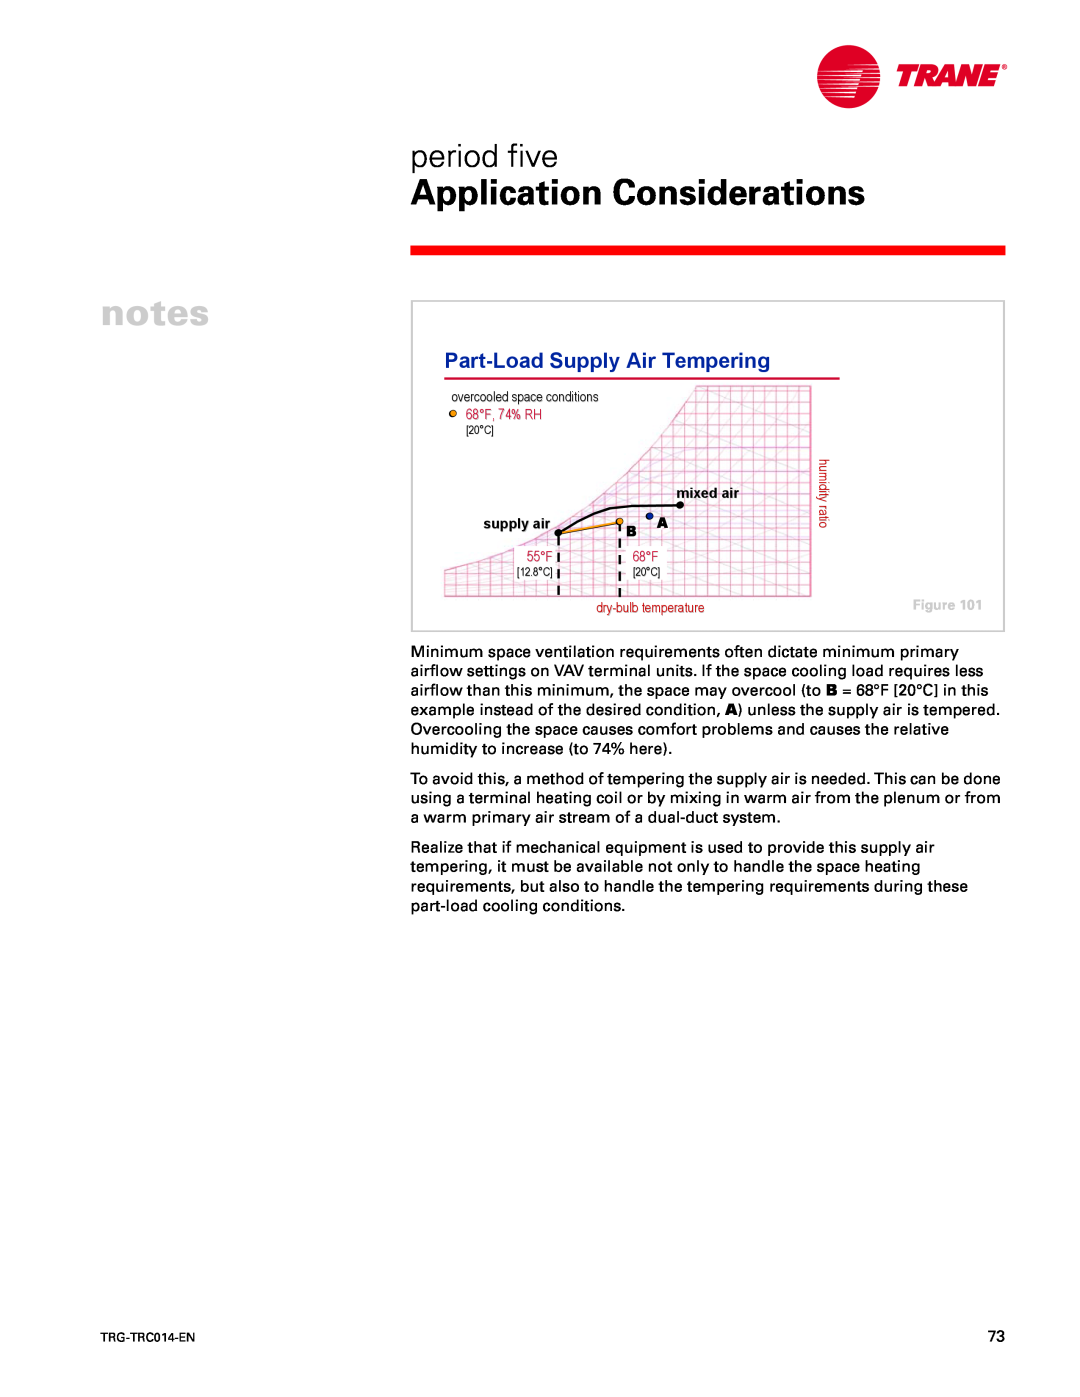 Trane TRG-TRC014-EN manual Part-LoadSupply Air Tempering, Application Considerations, period five 